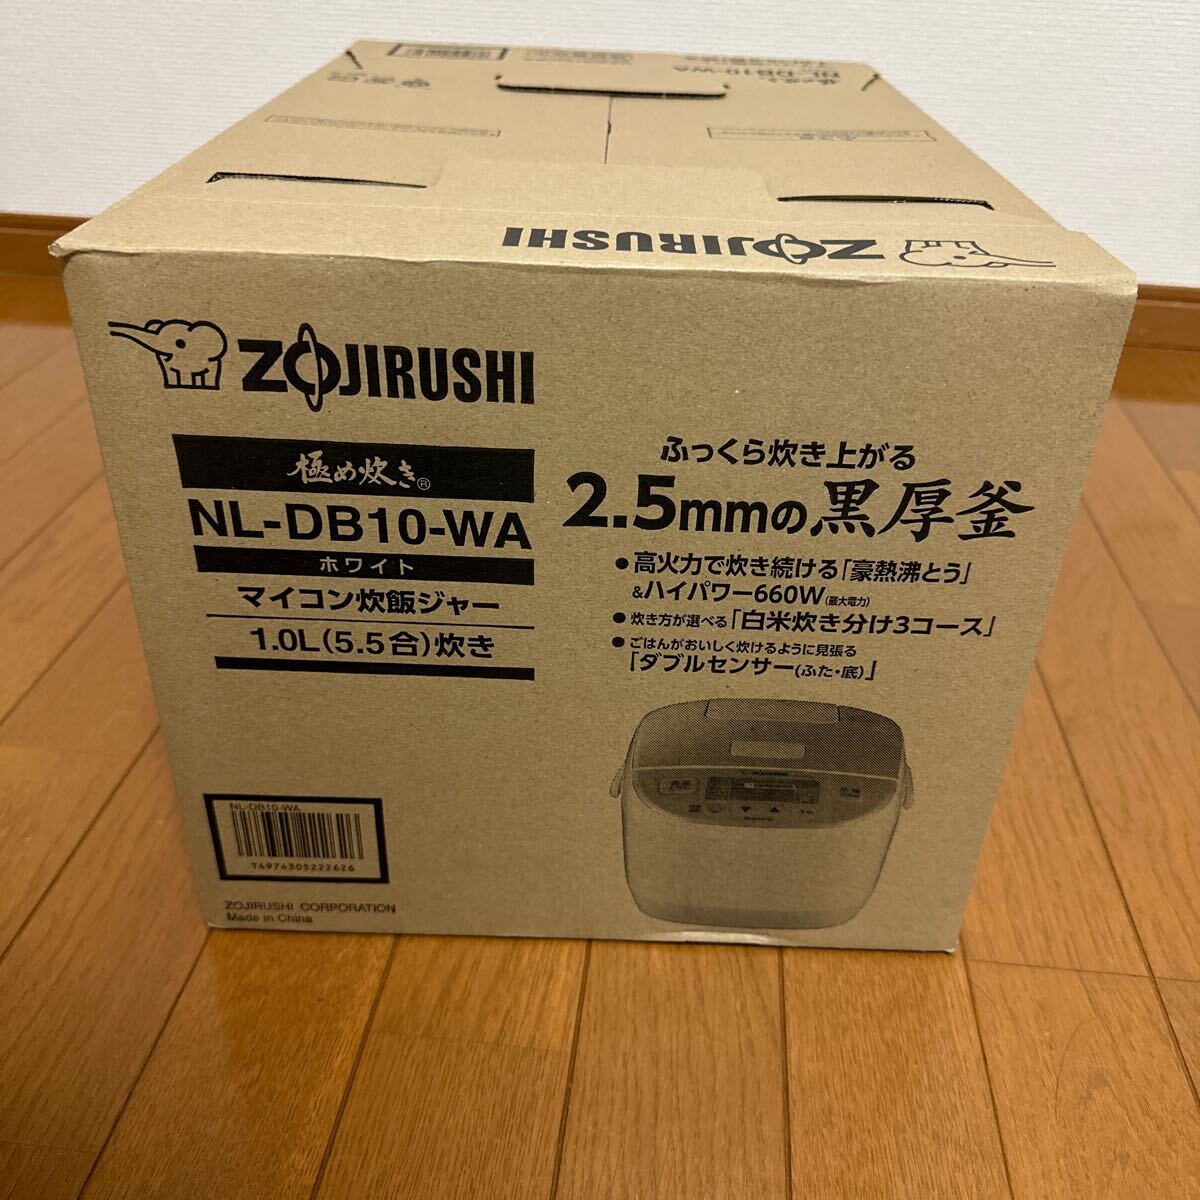  Zojirushi microcomputer ..ja-NL-DB10-WA( белый )